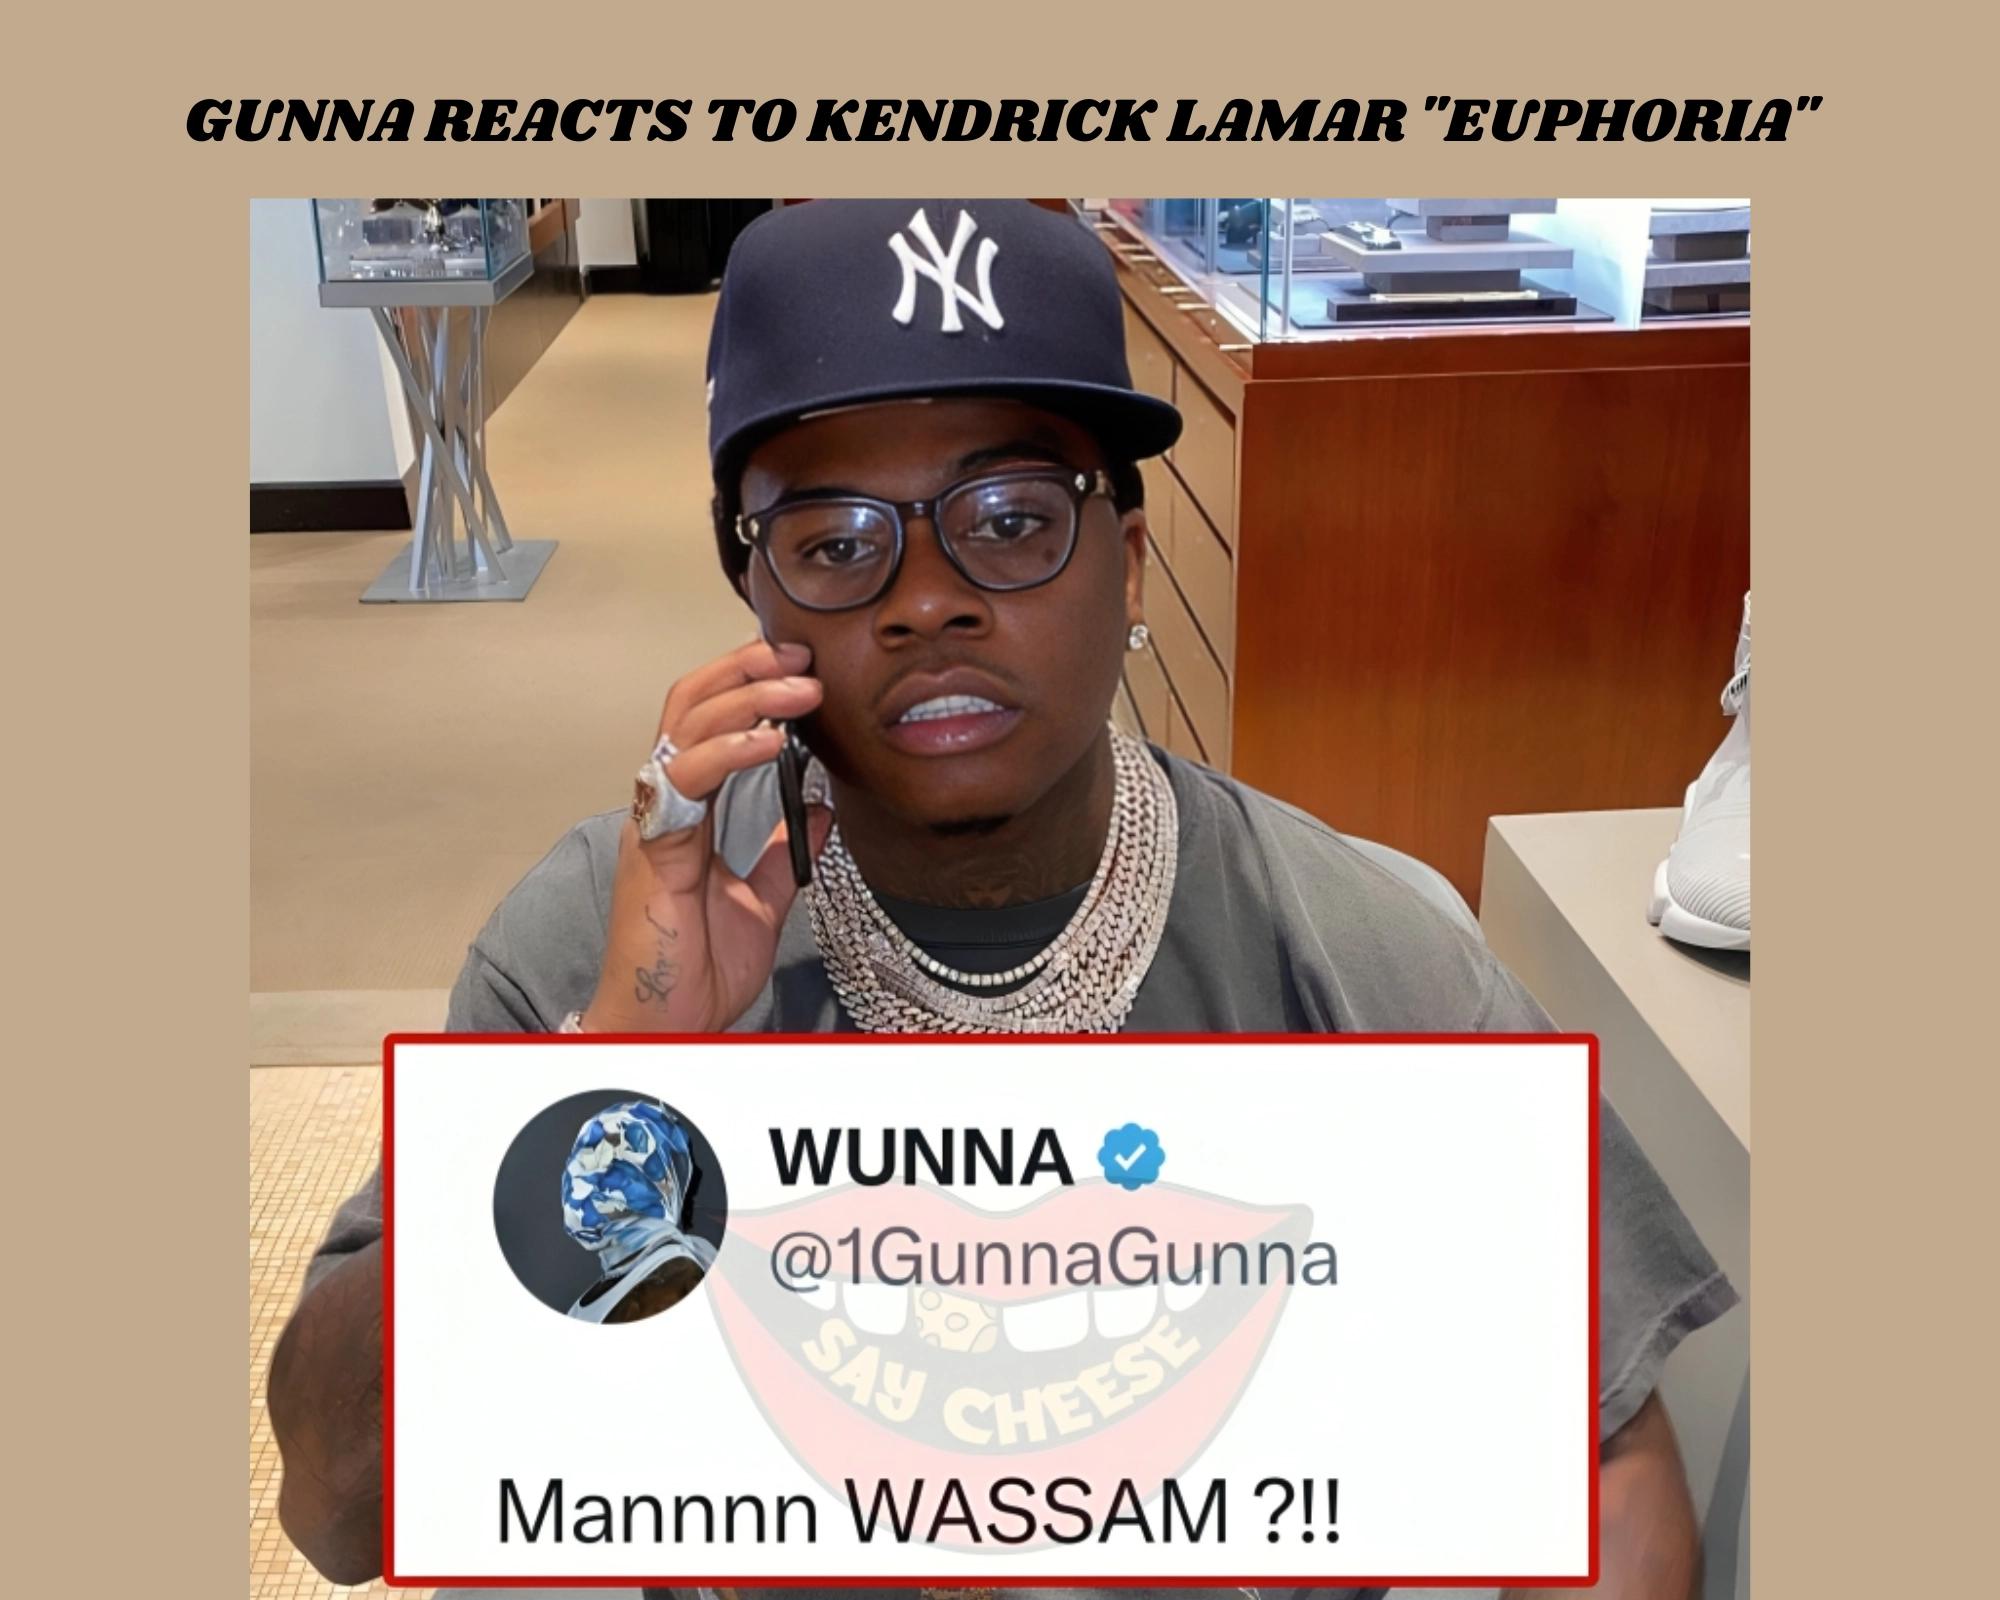 Gunna Responds to Kendrick Lamar’s Surprise “Euphoria” Shoutout [Video]